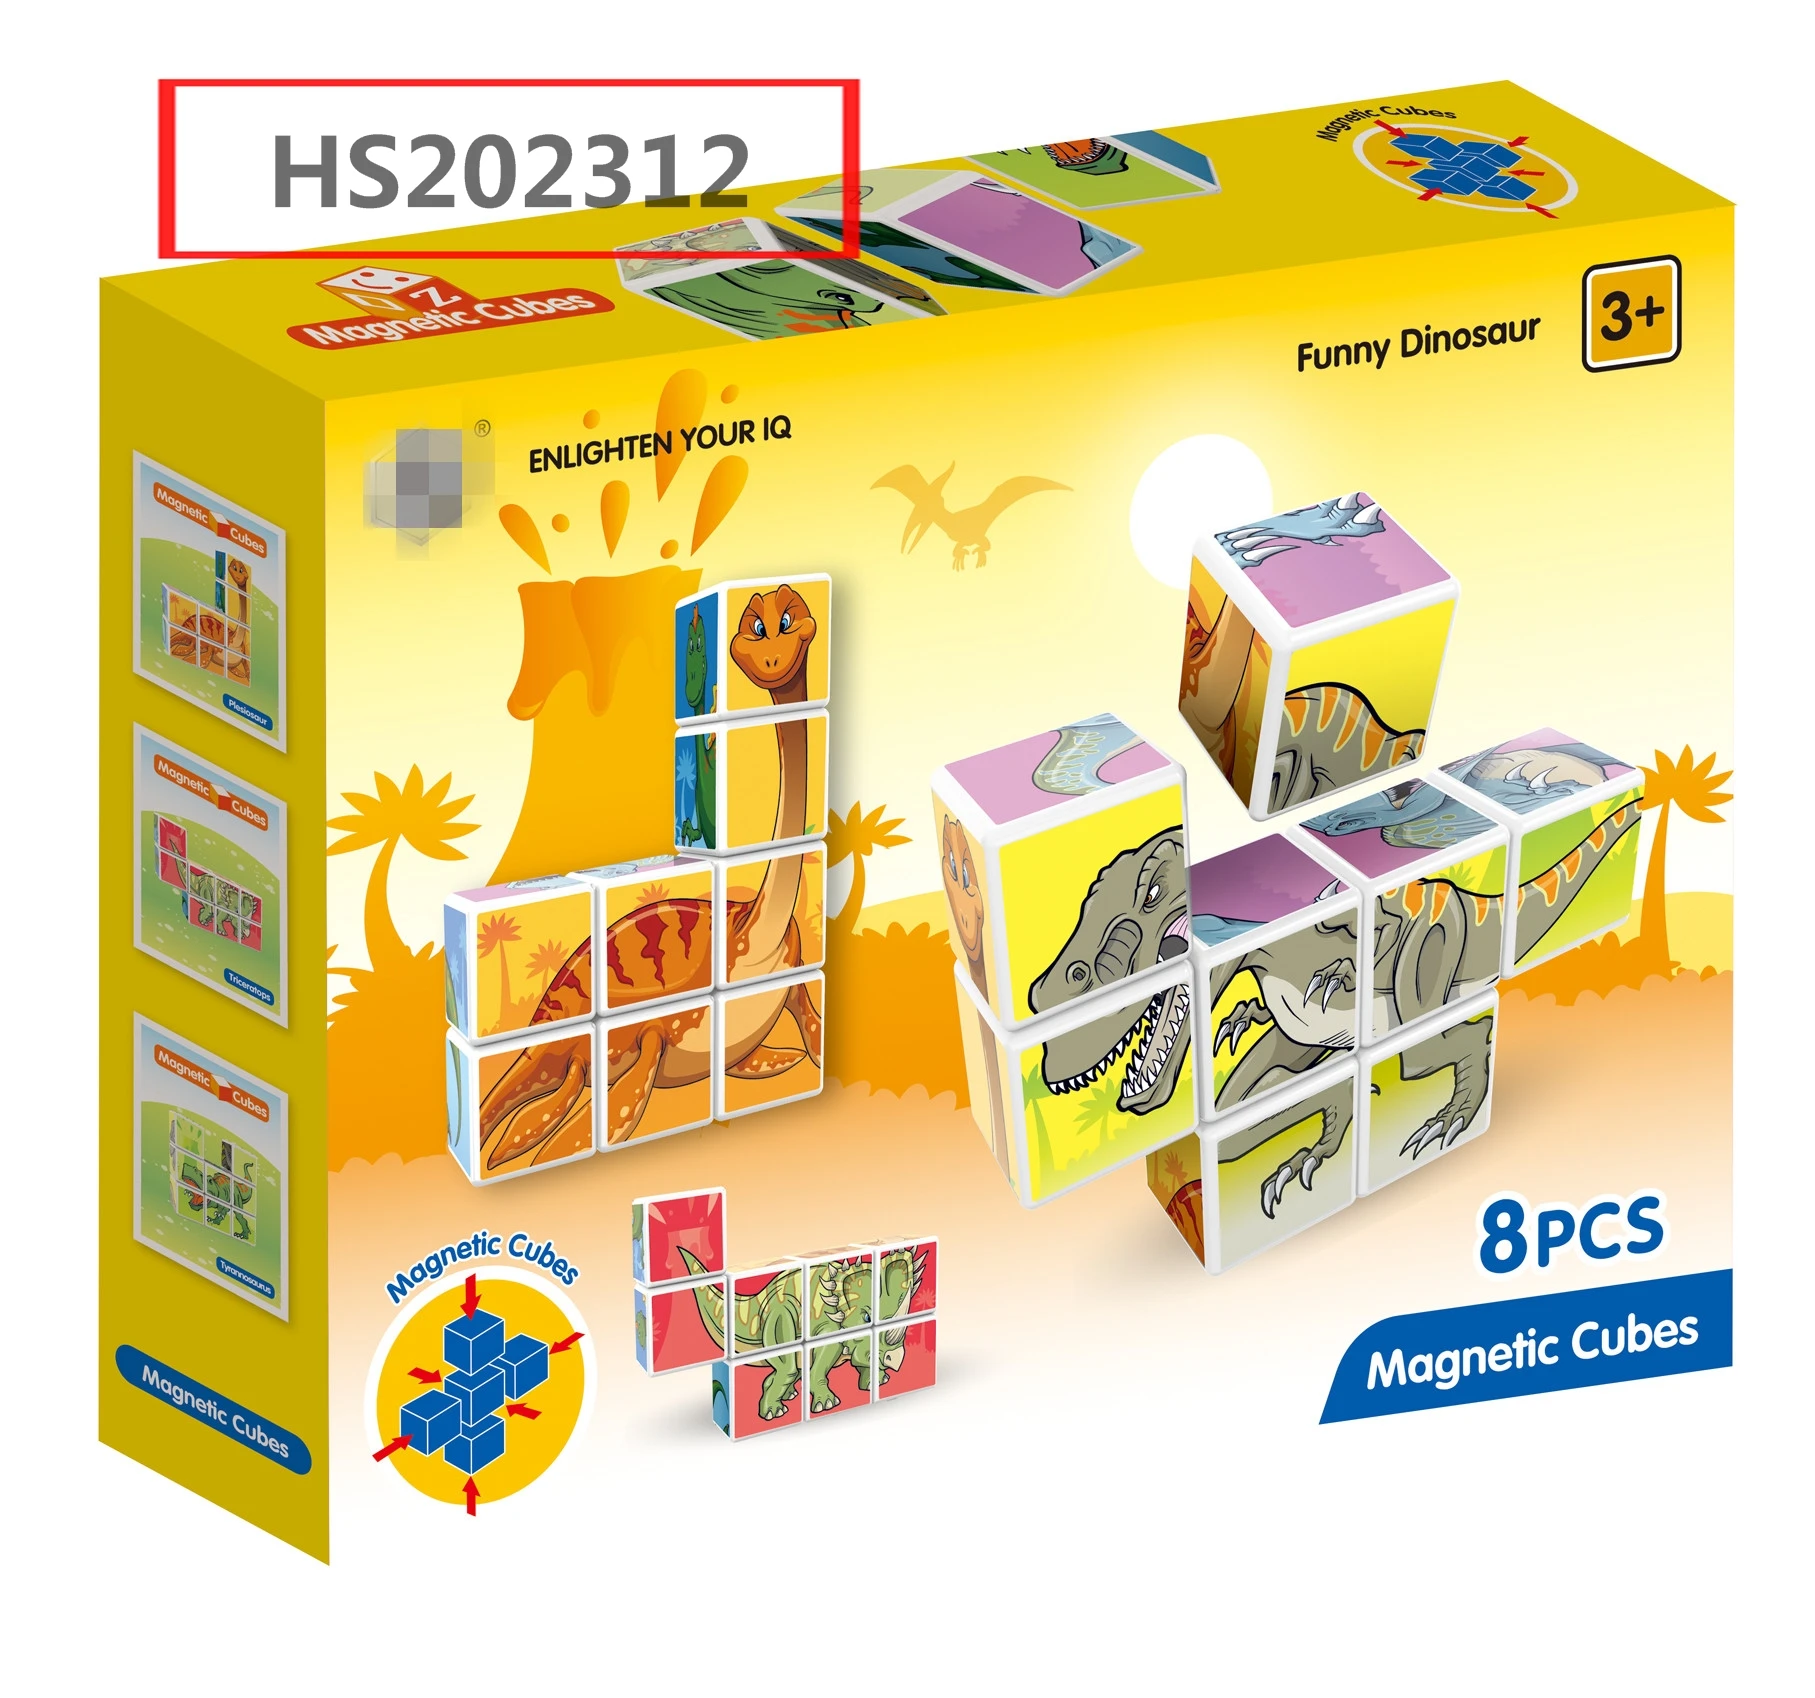 HS202312, Huwsin Toys, Magnetic magic cube,magneticbuilding block, 8pcs, Educational toy